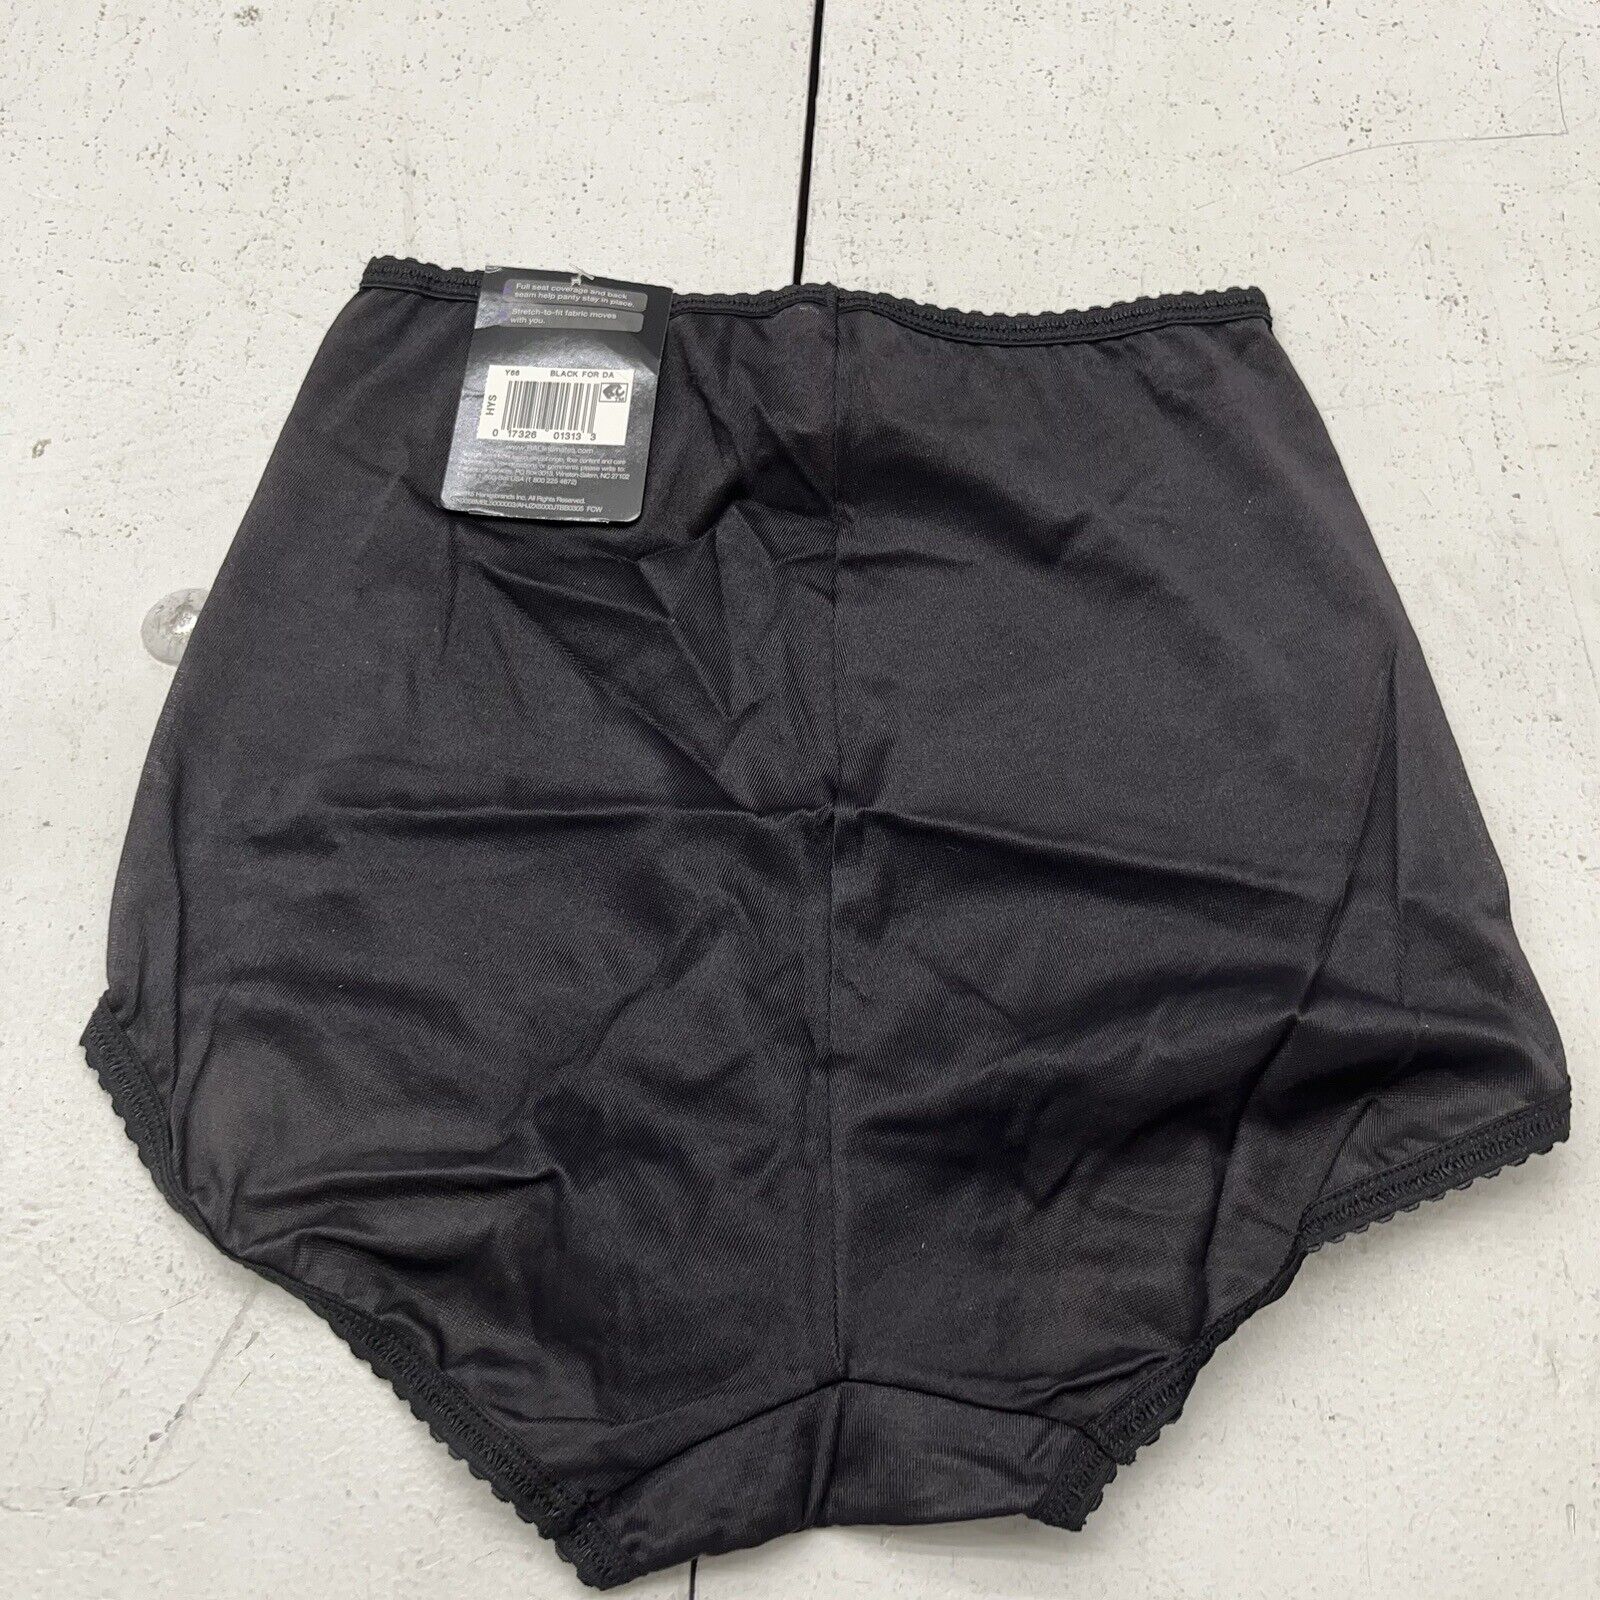 Bali Skimp Skamp Stretch Panties, Black, 5 - Nylon 